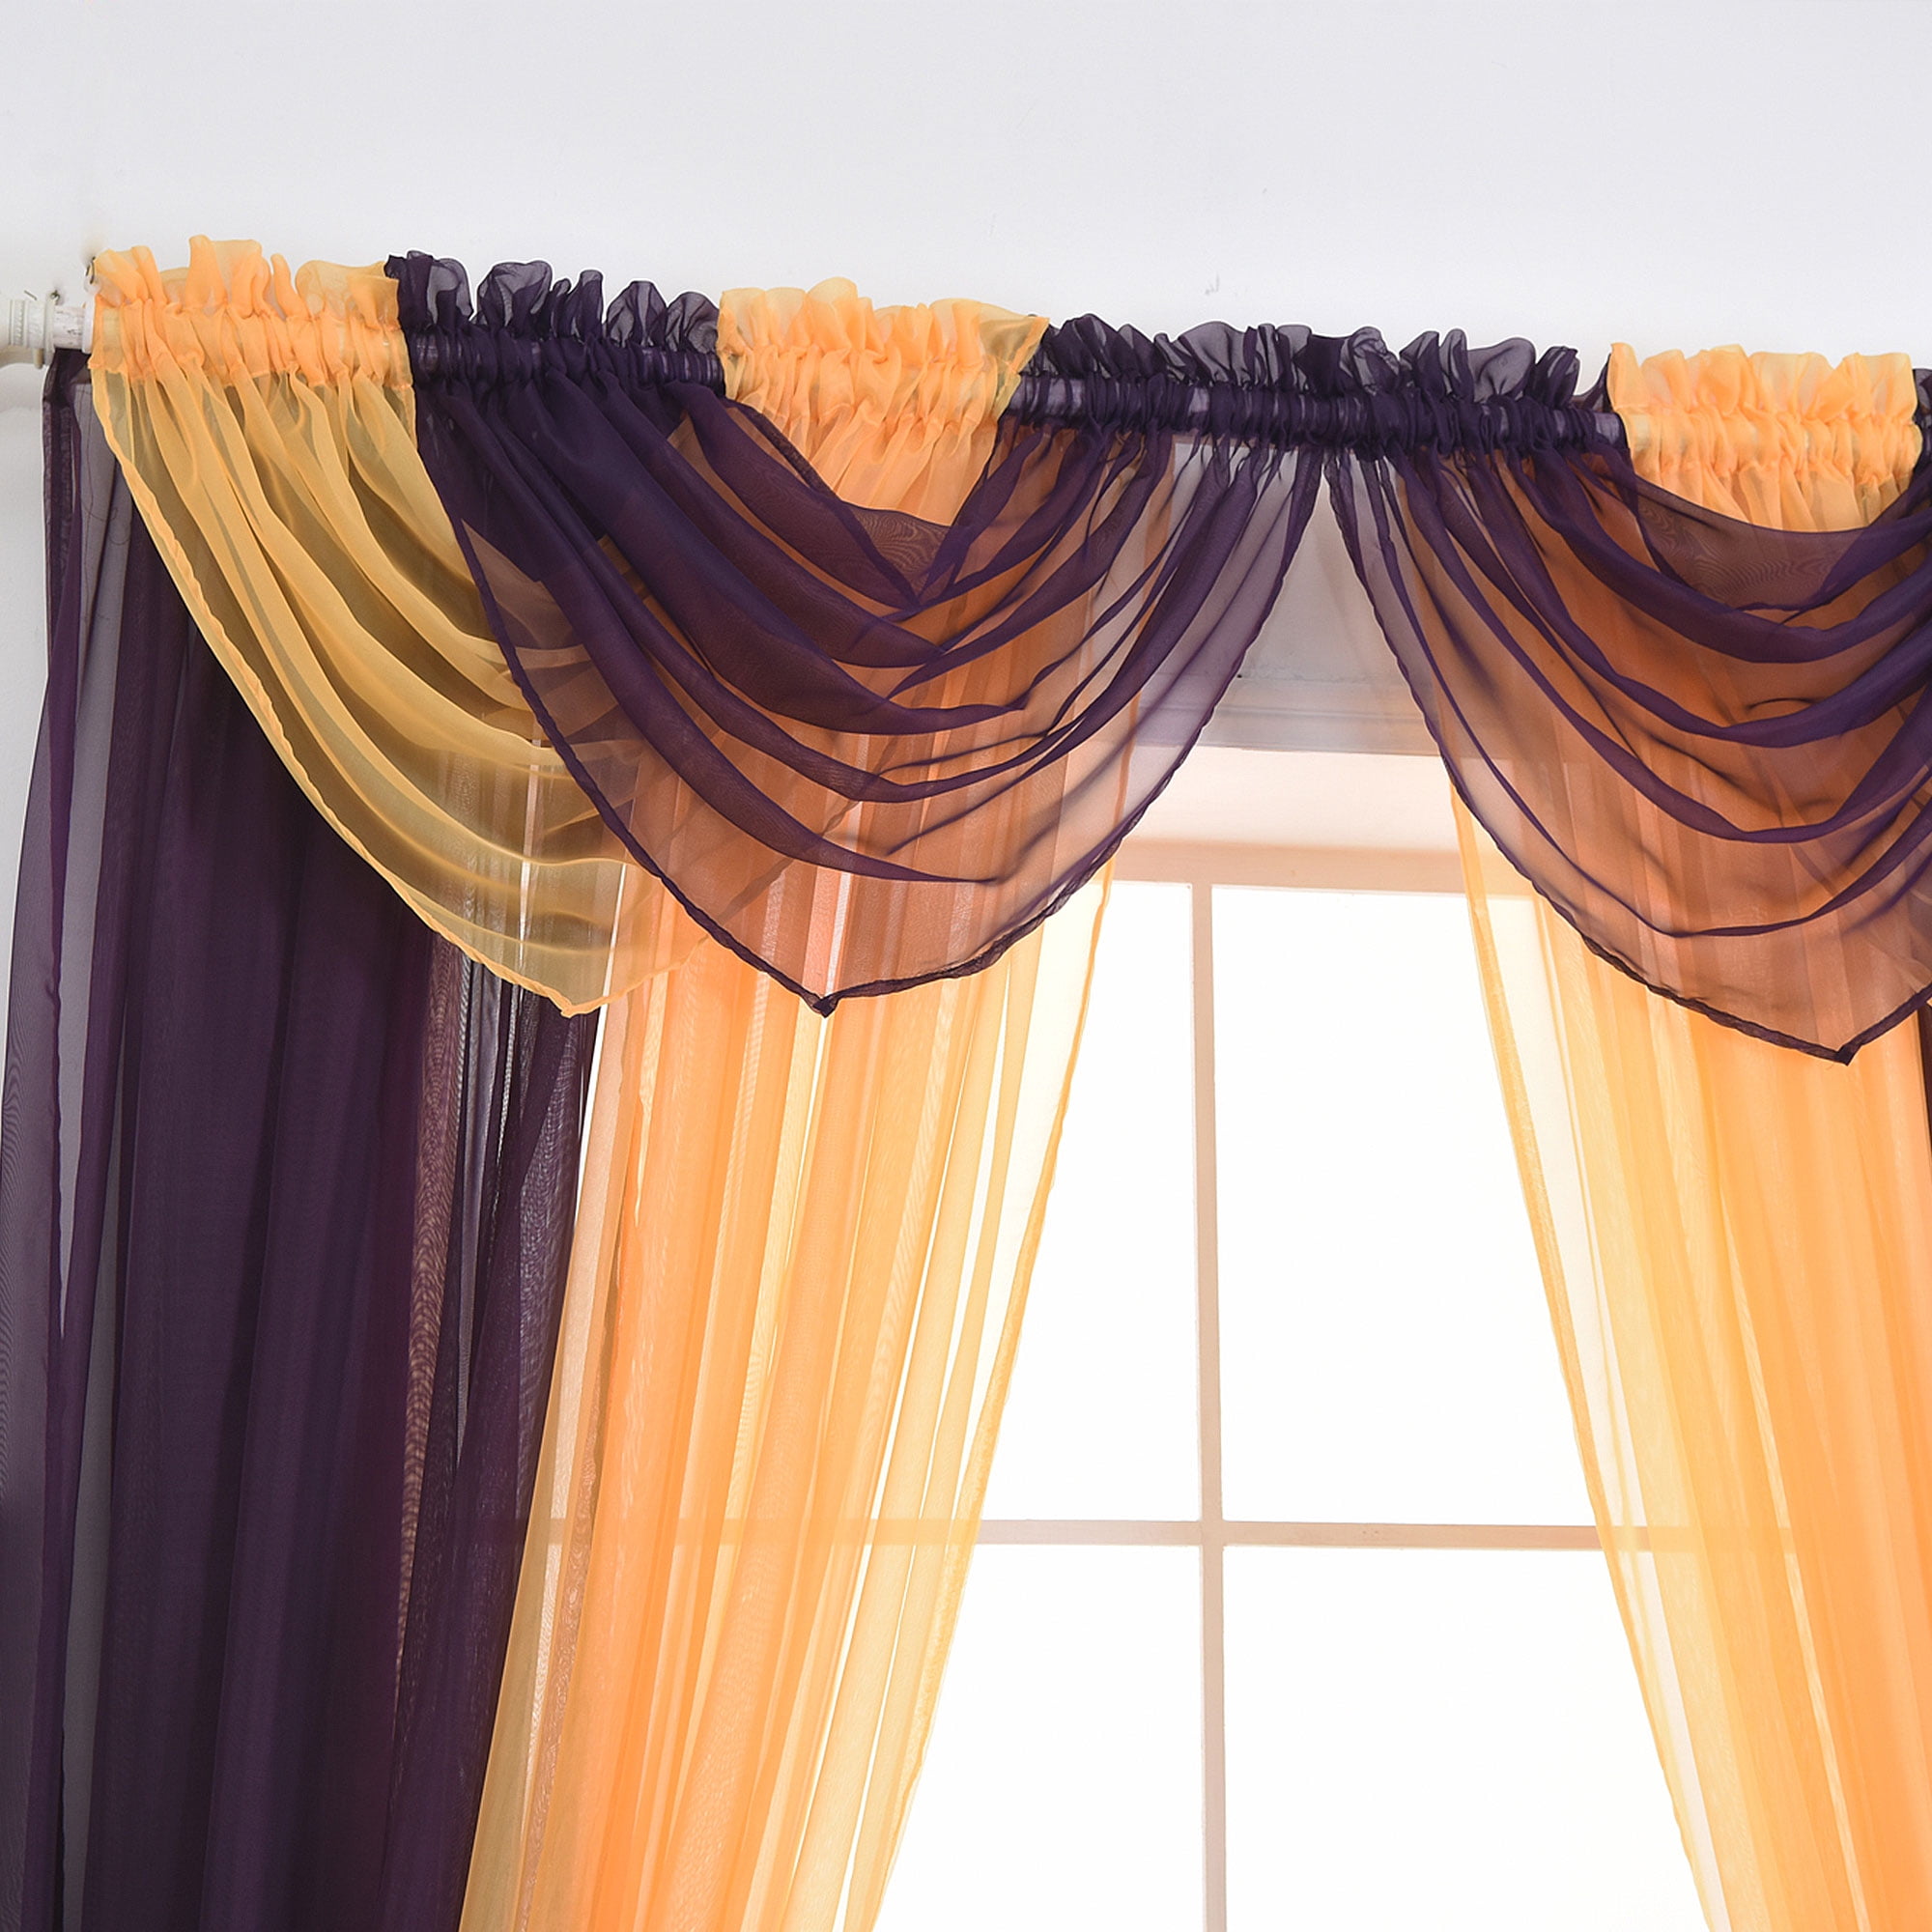 Bedroom Blinds Curtain Door Window Sheer Scarf Drape Panel Decoration Valances 